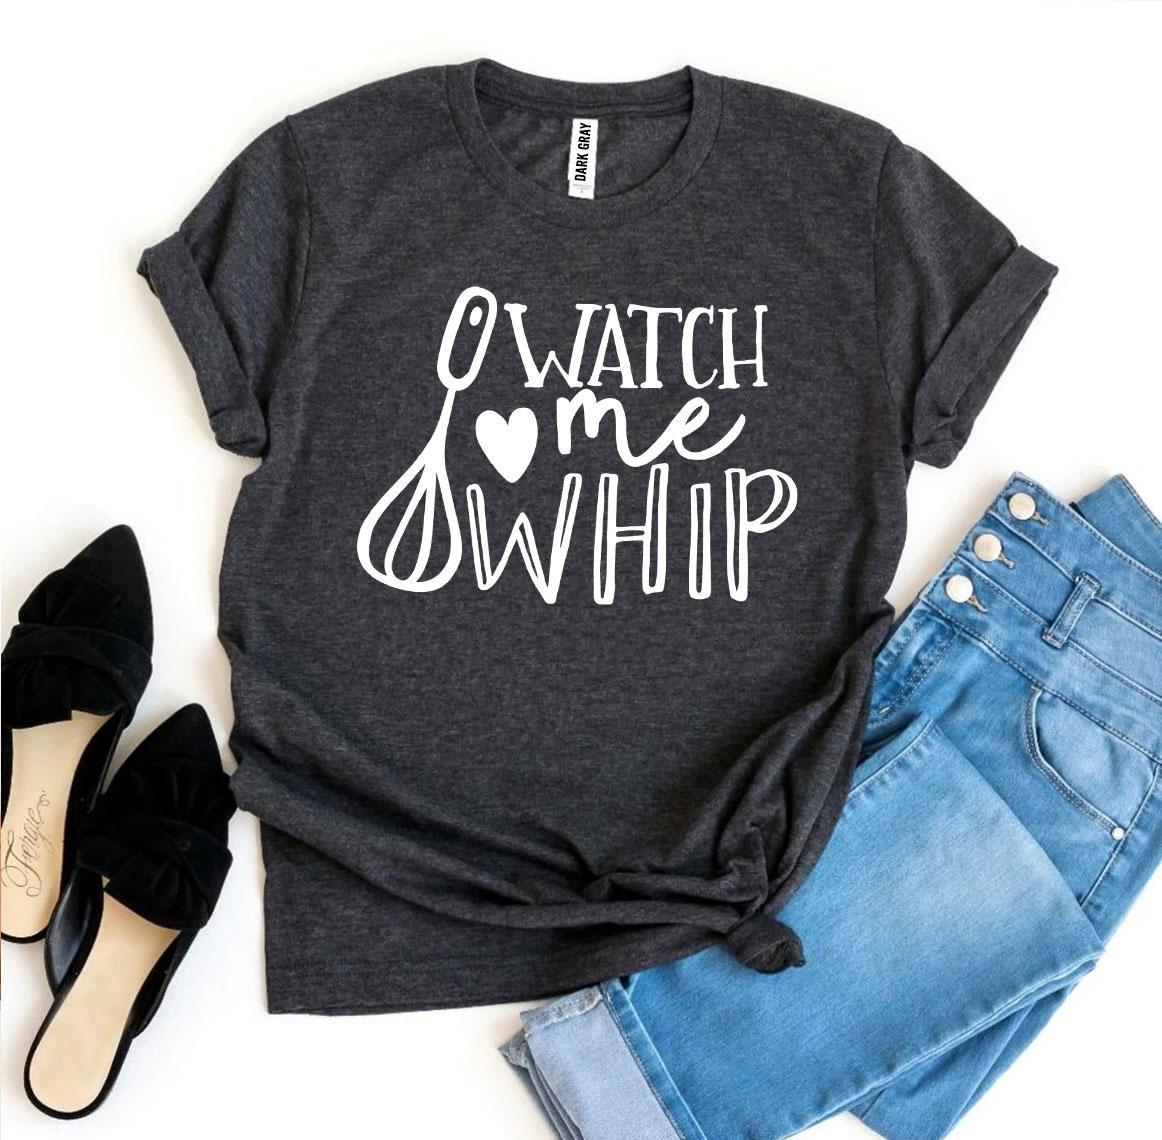 Watch Me Whip T-shirt